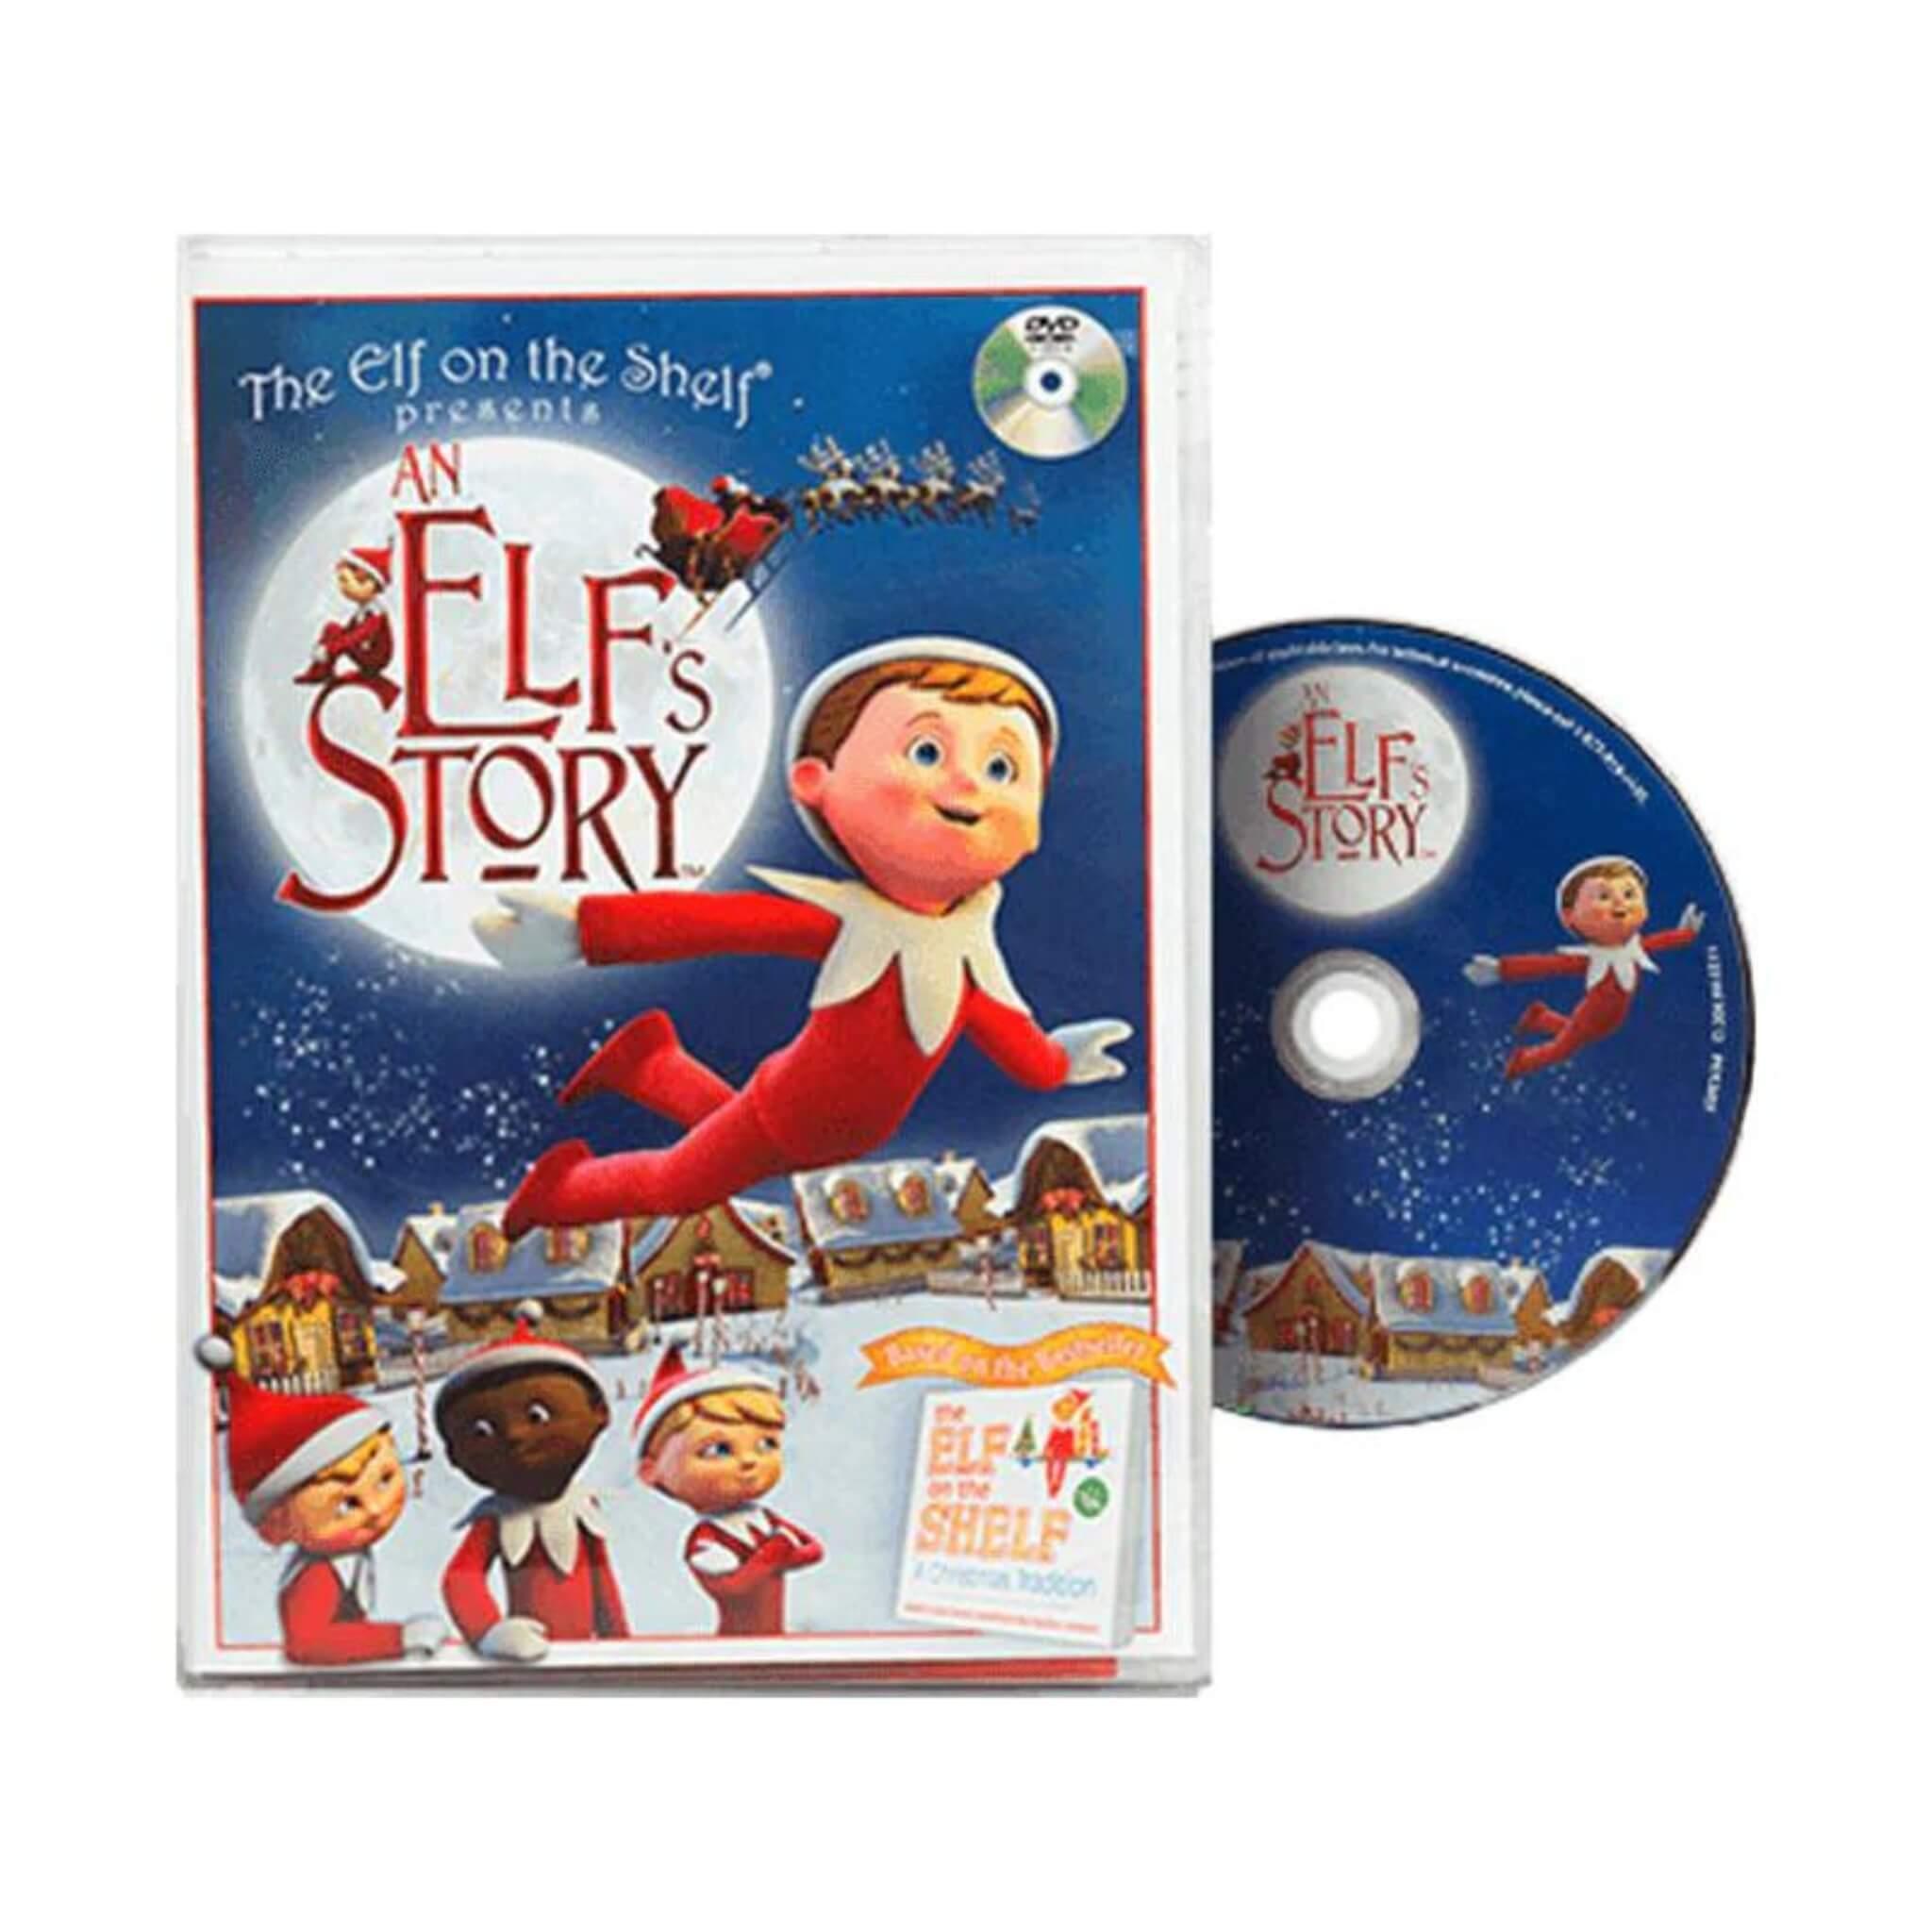 An Elf's Story™ DVD - The Elf on The Shelf